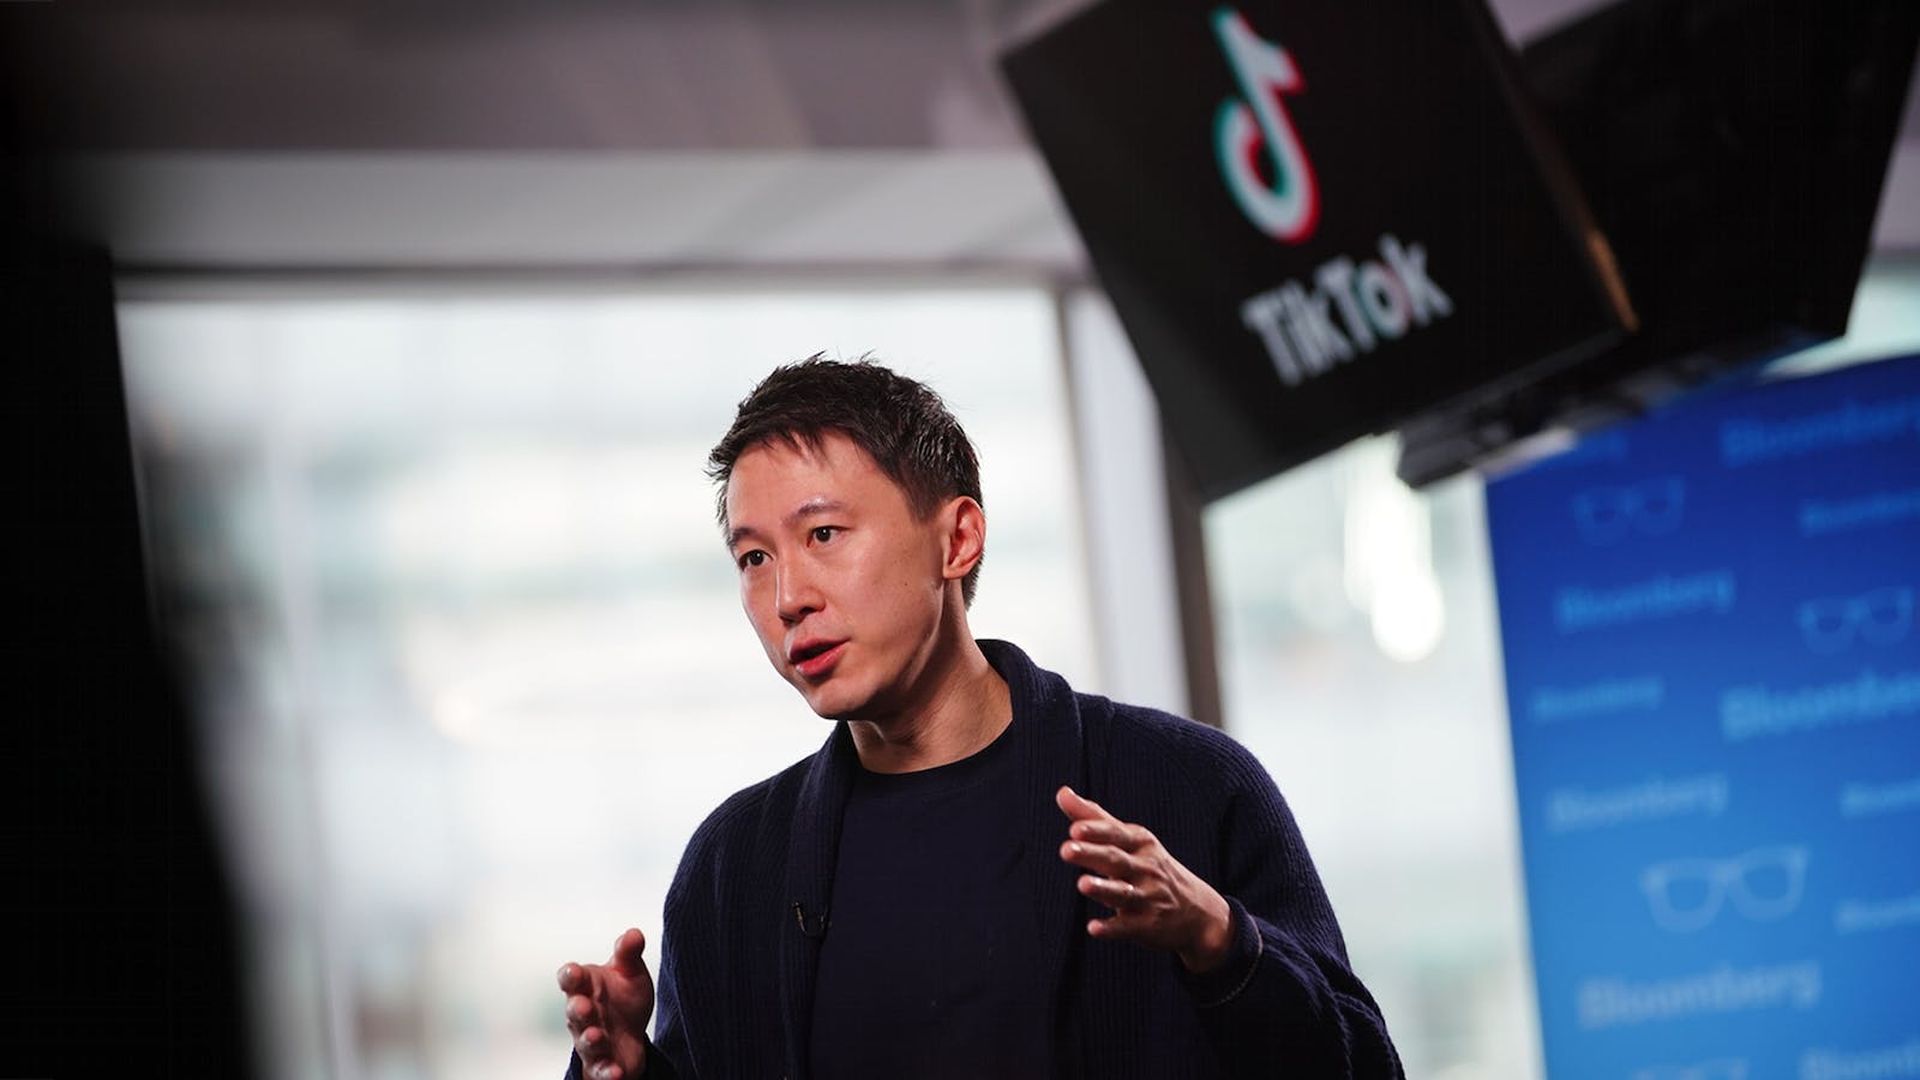 TikTok's CEO Shou Zi Chew had some statements on TikTok US data being shared with China